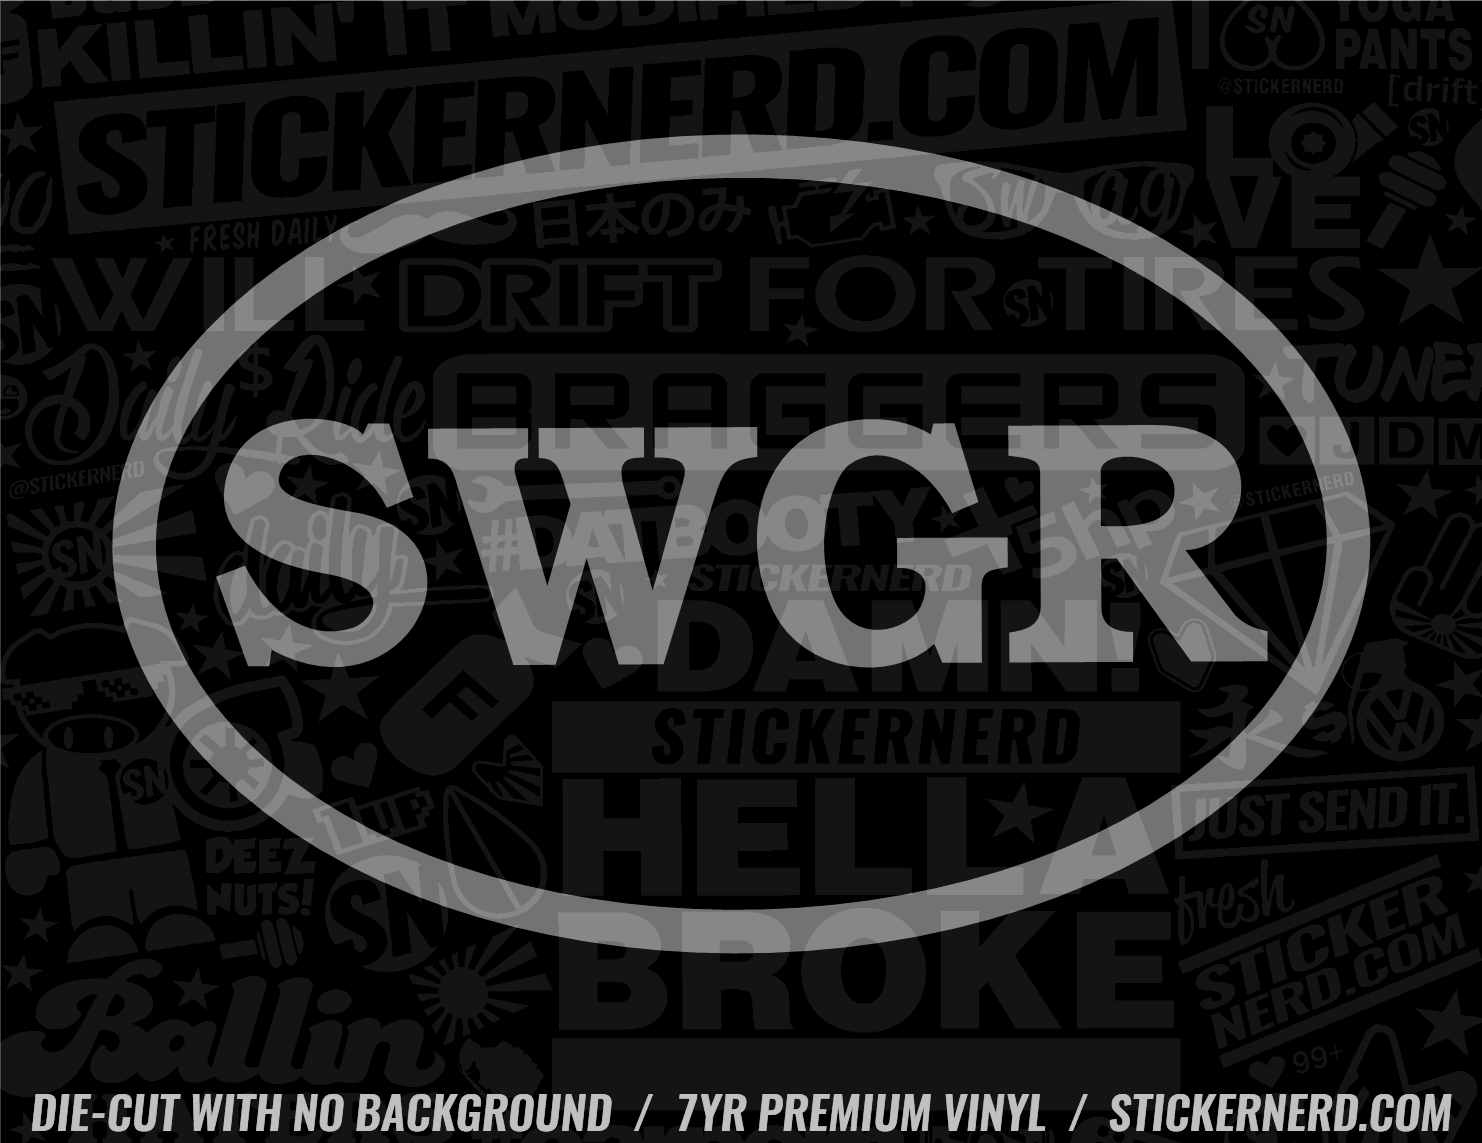 SWGR Swagger Sticker - Decal - STICKERNERD.COM